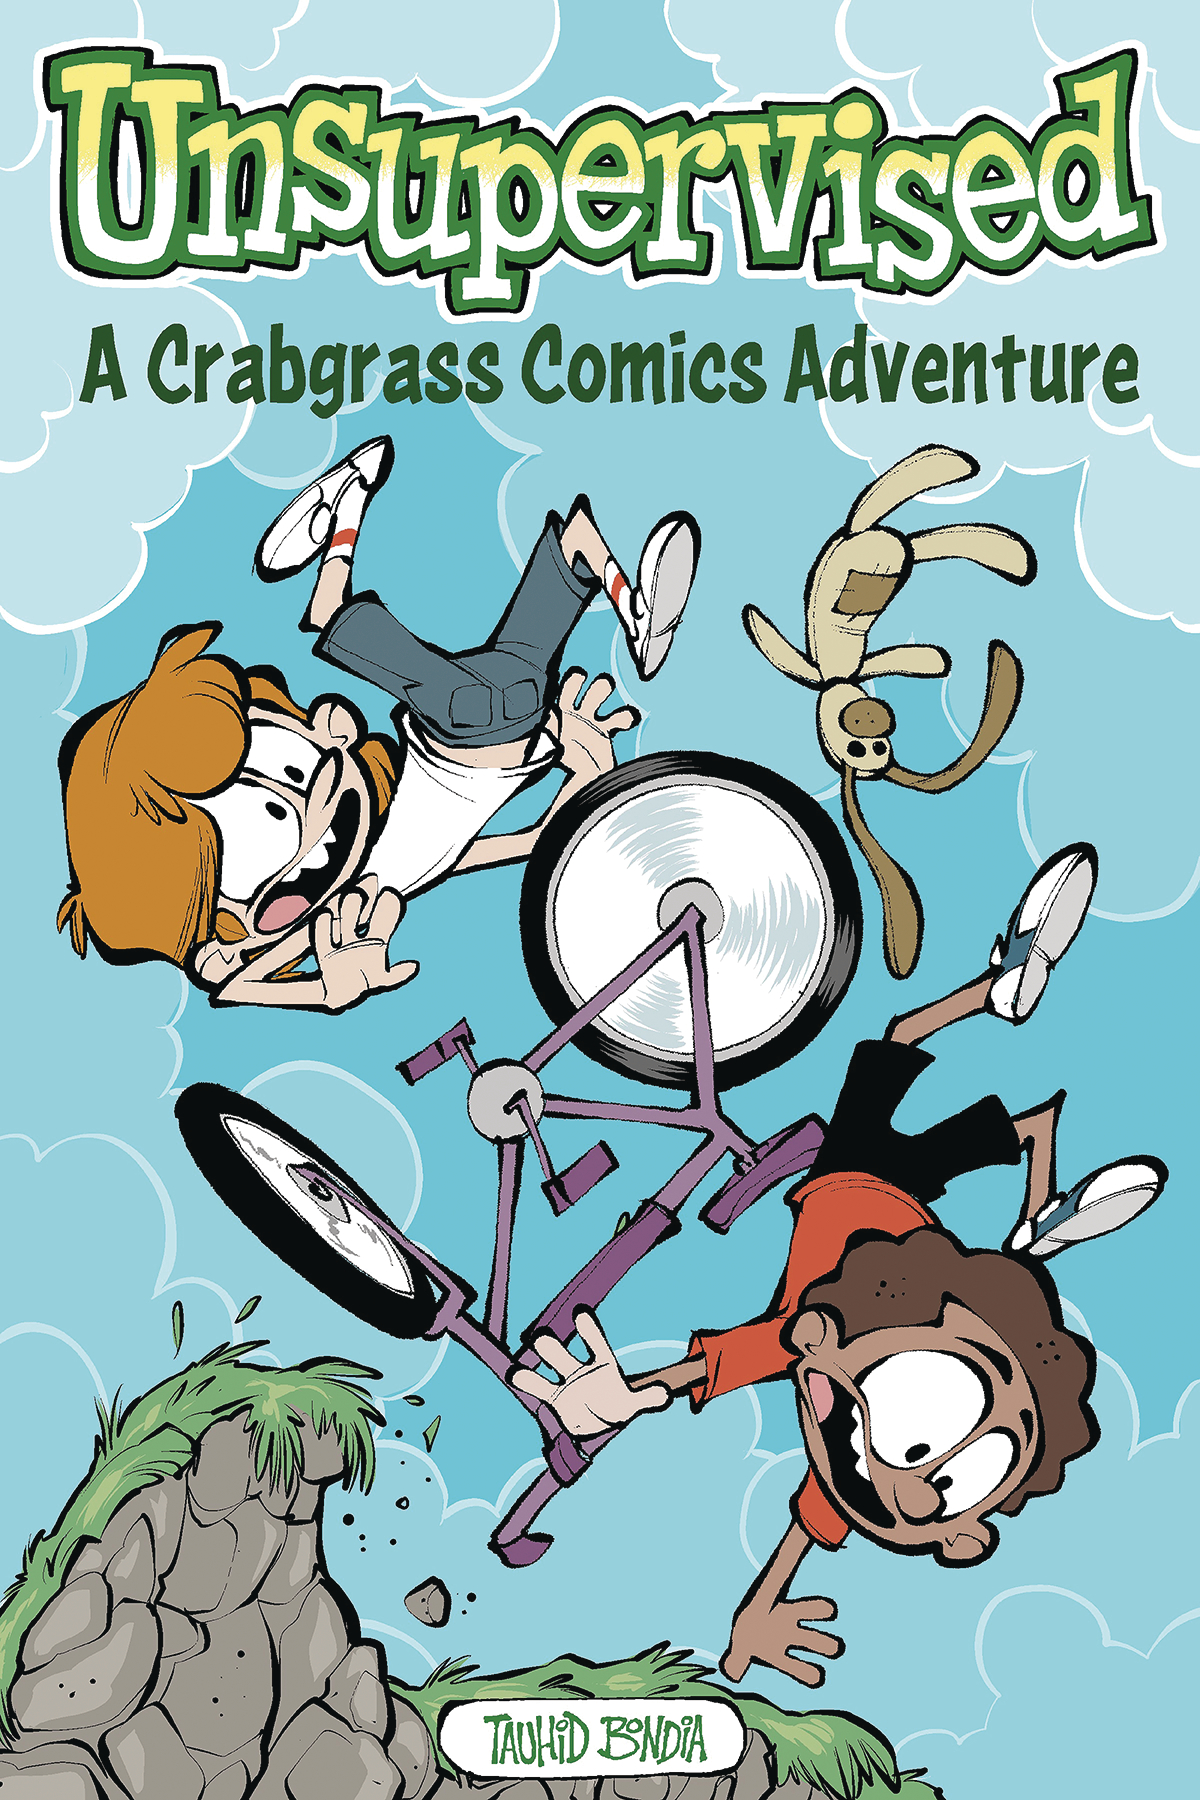 Crabgrass Comic Adventures Graphic Novel Unsupervised